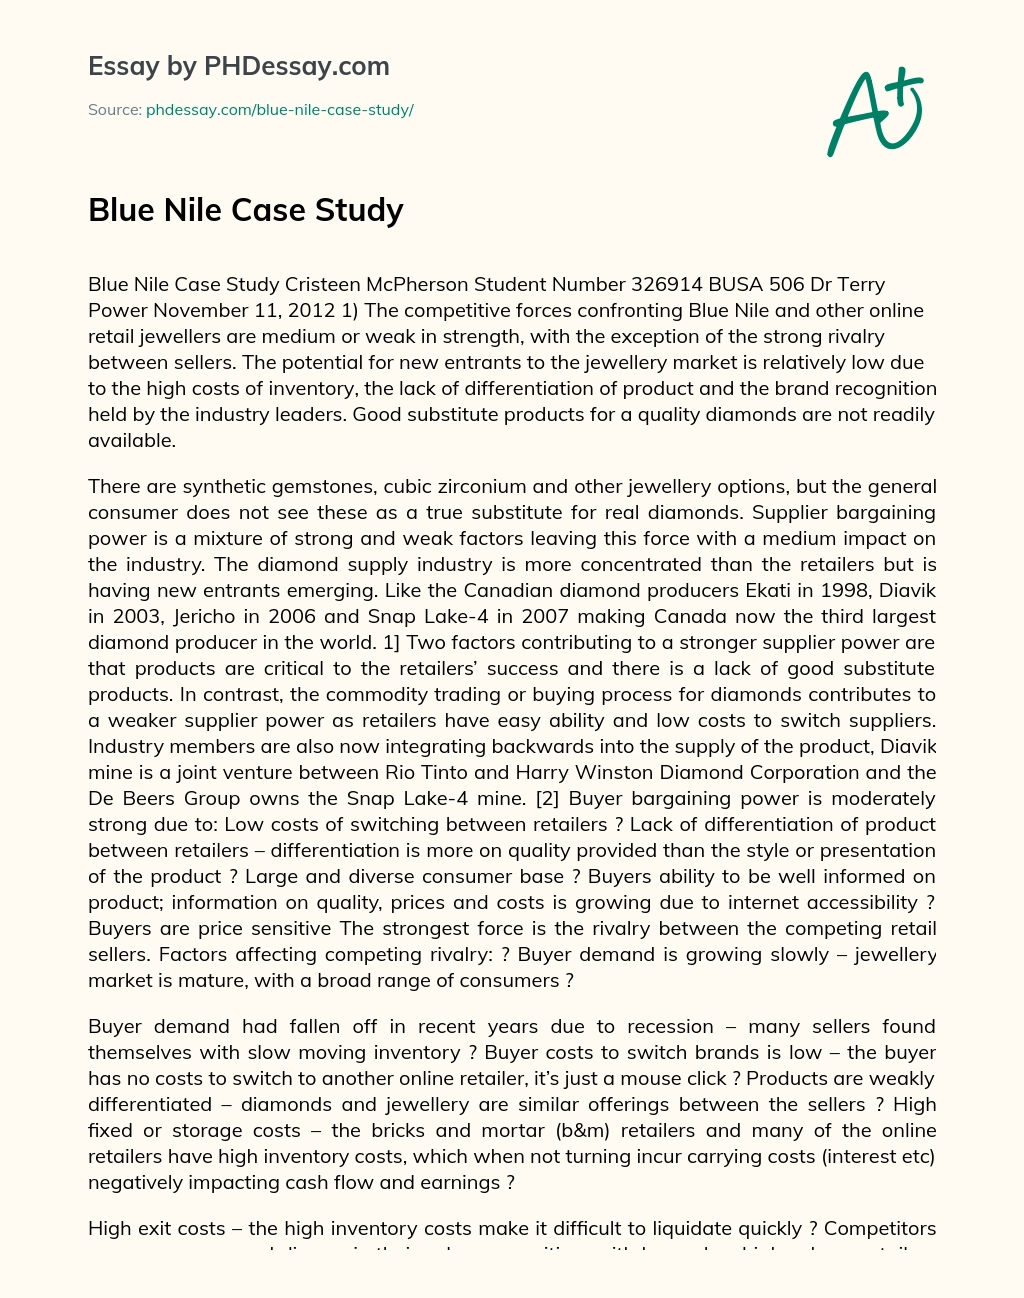 Blue Nile Case Study essay